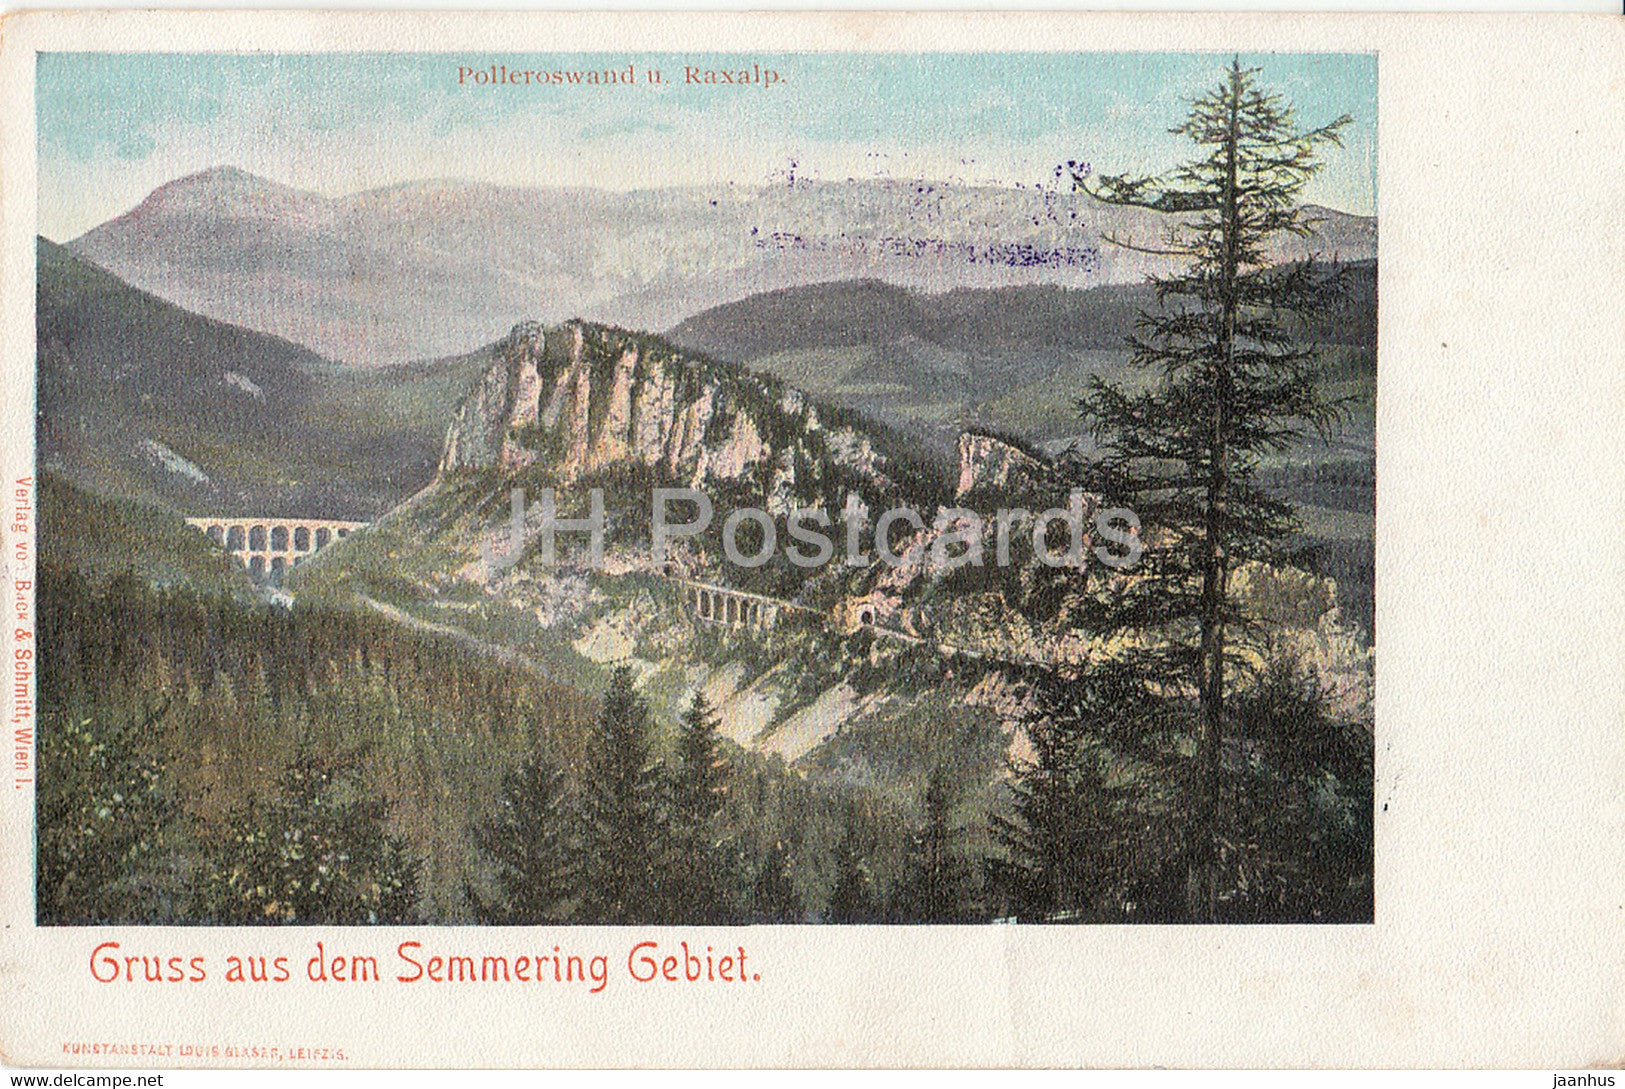 Gruss aus dem Semmering Gebiet - Polleroswand u Raxalp - Drucksache - old postcard - 1900 - Austria - used - JH Postcards